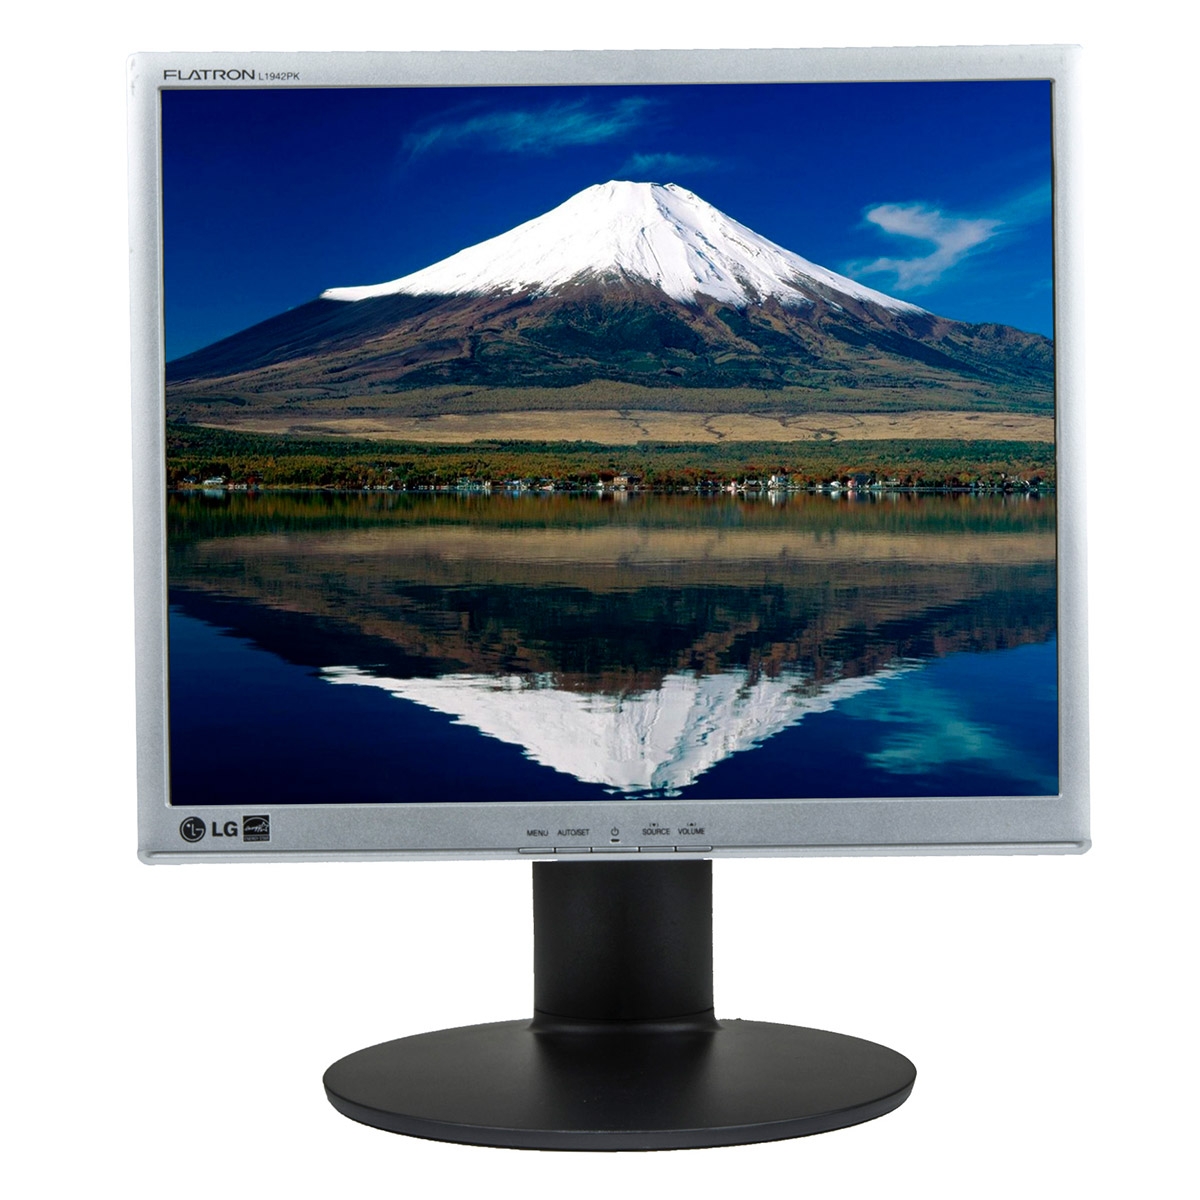 LG L1942PE  19 inch LCD  1280 x 800  negru - argintiu  monitor refurbished